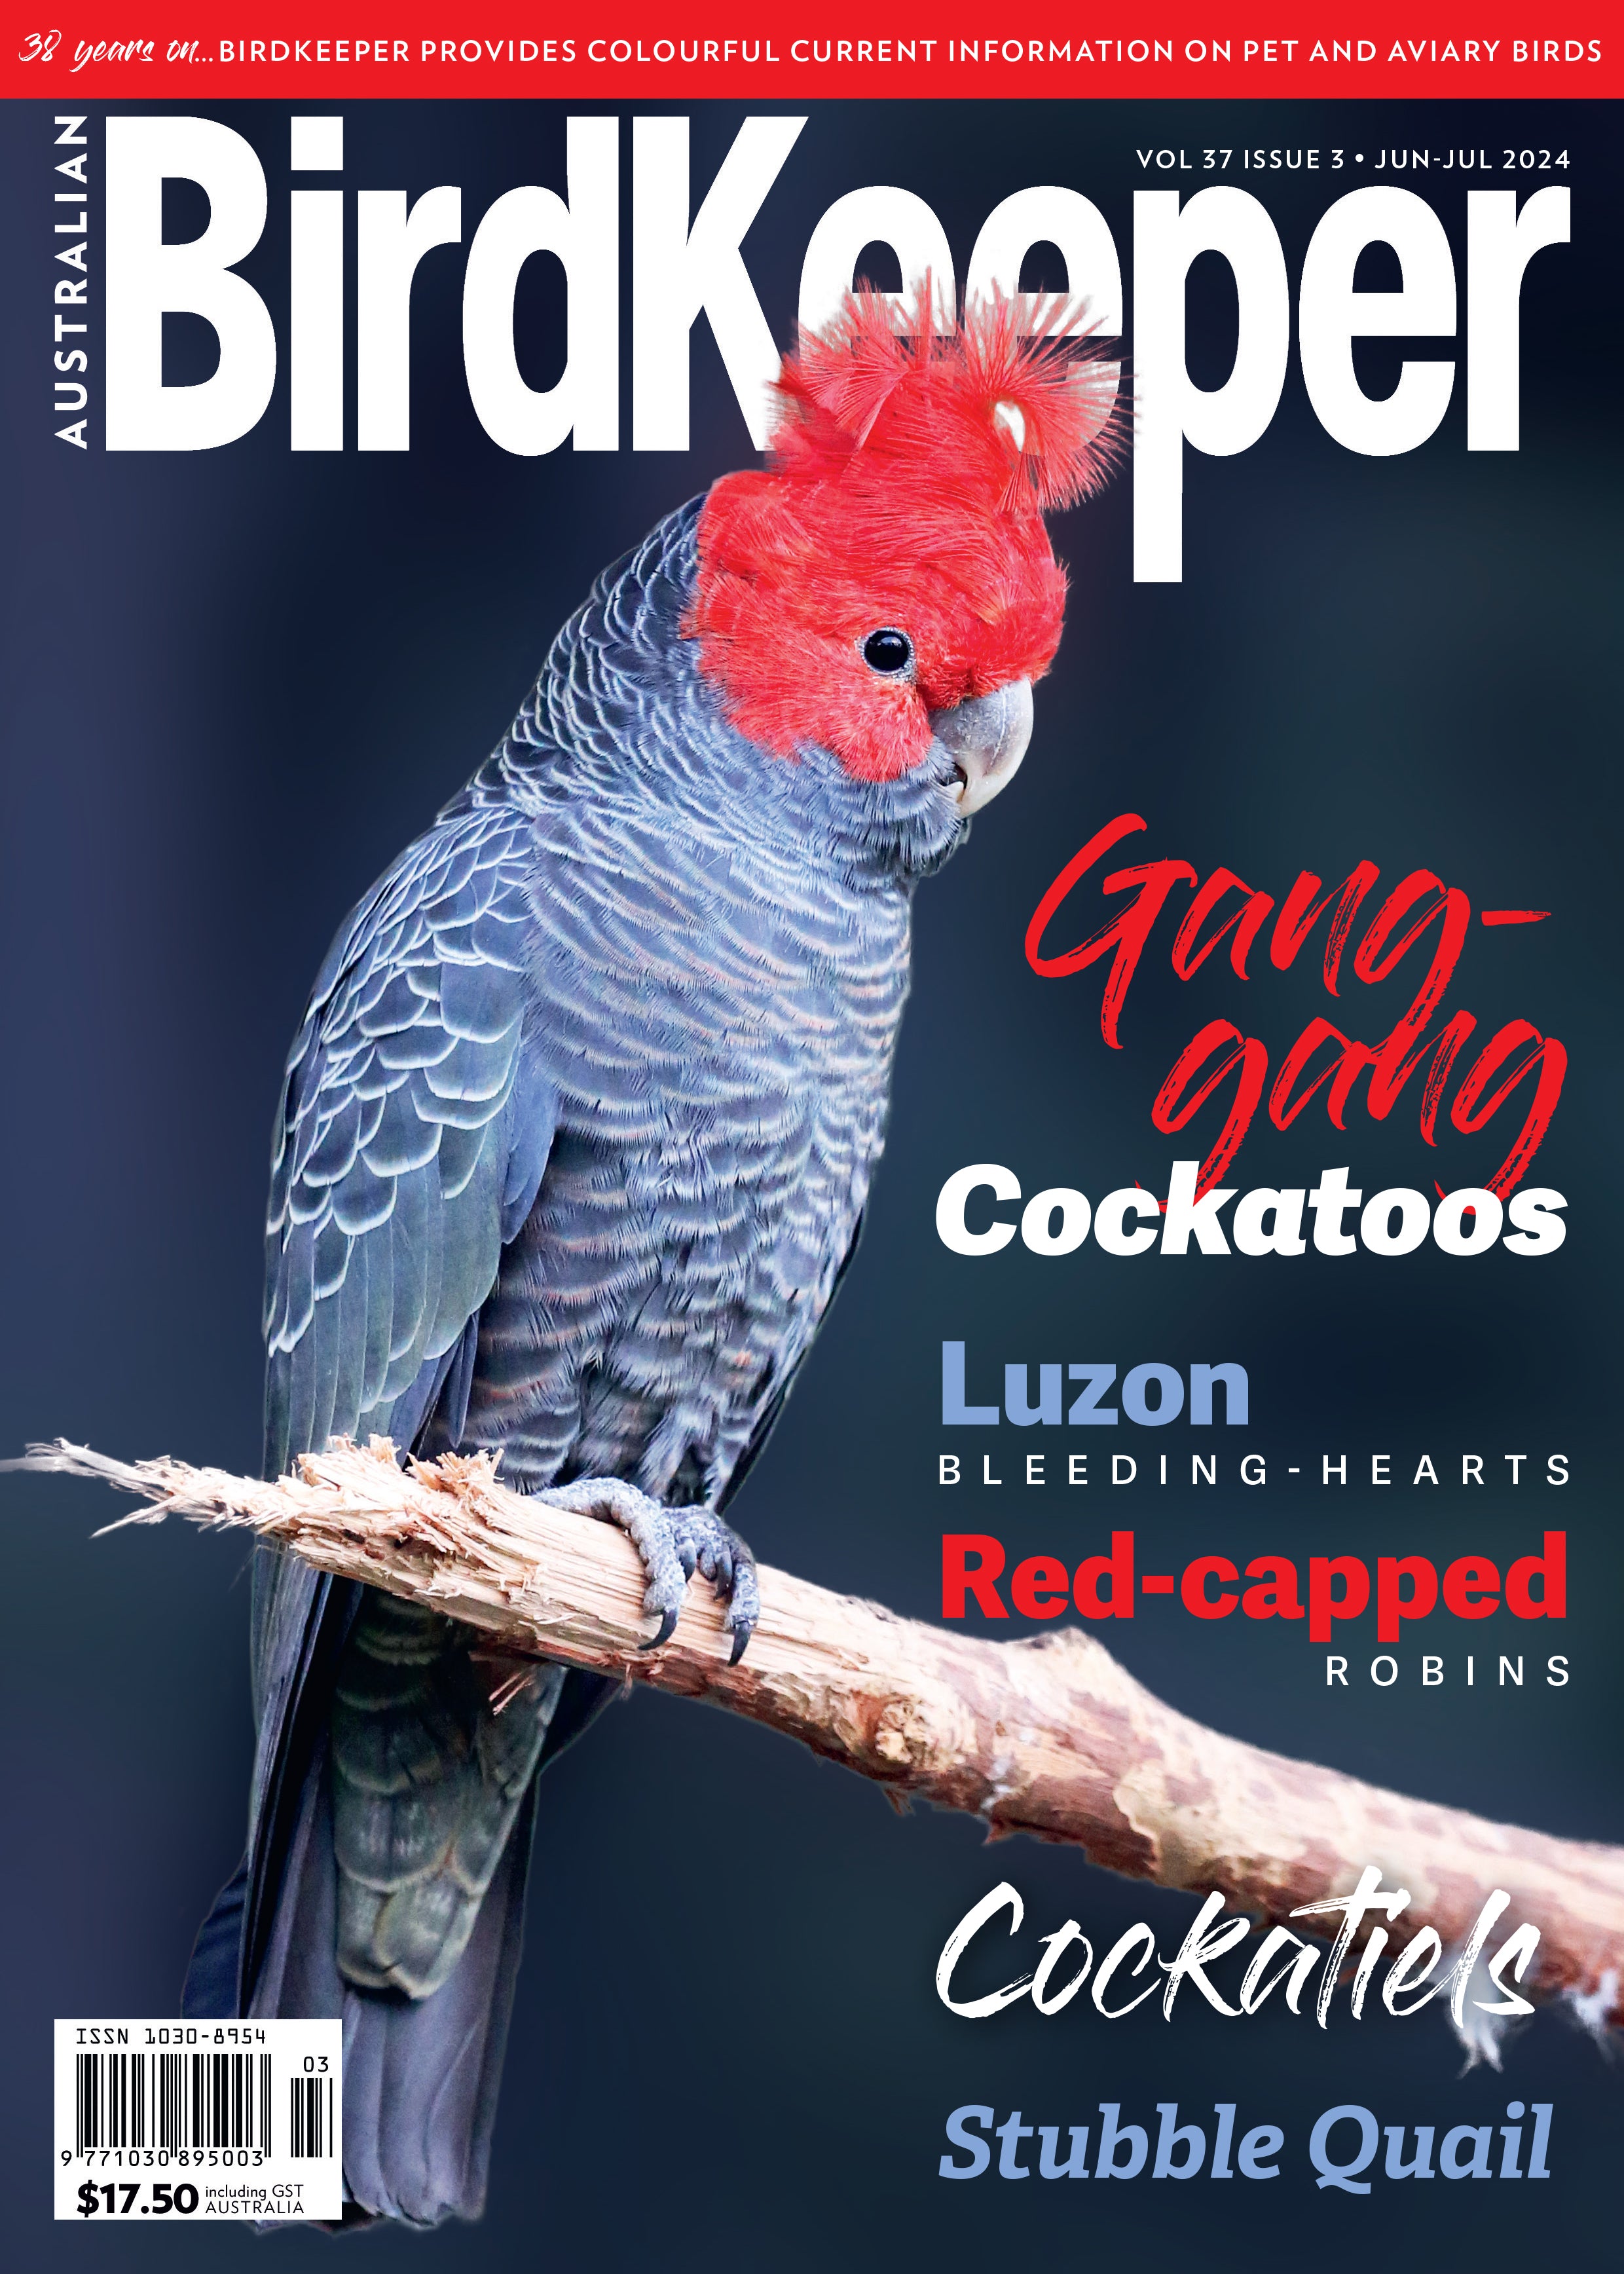 Australian BirdKeeper Magazine Vol 37 Iss 3